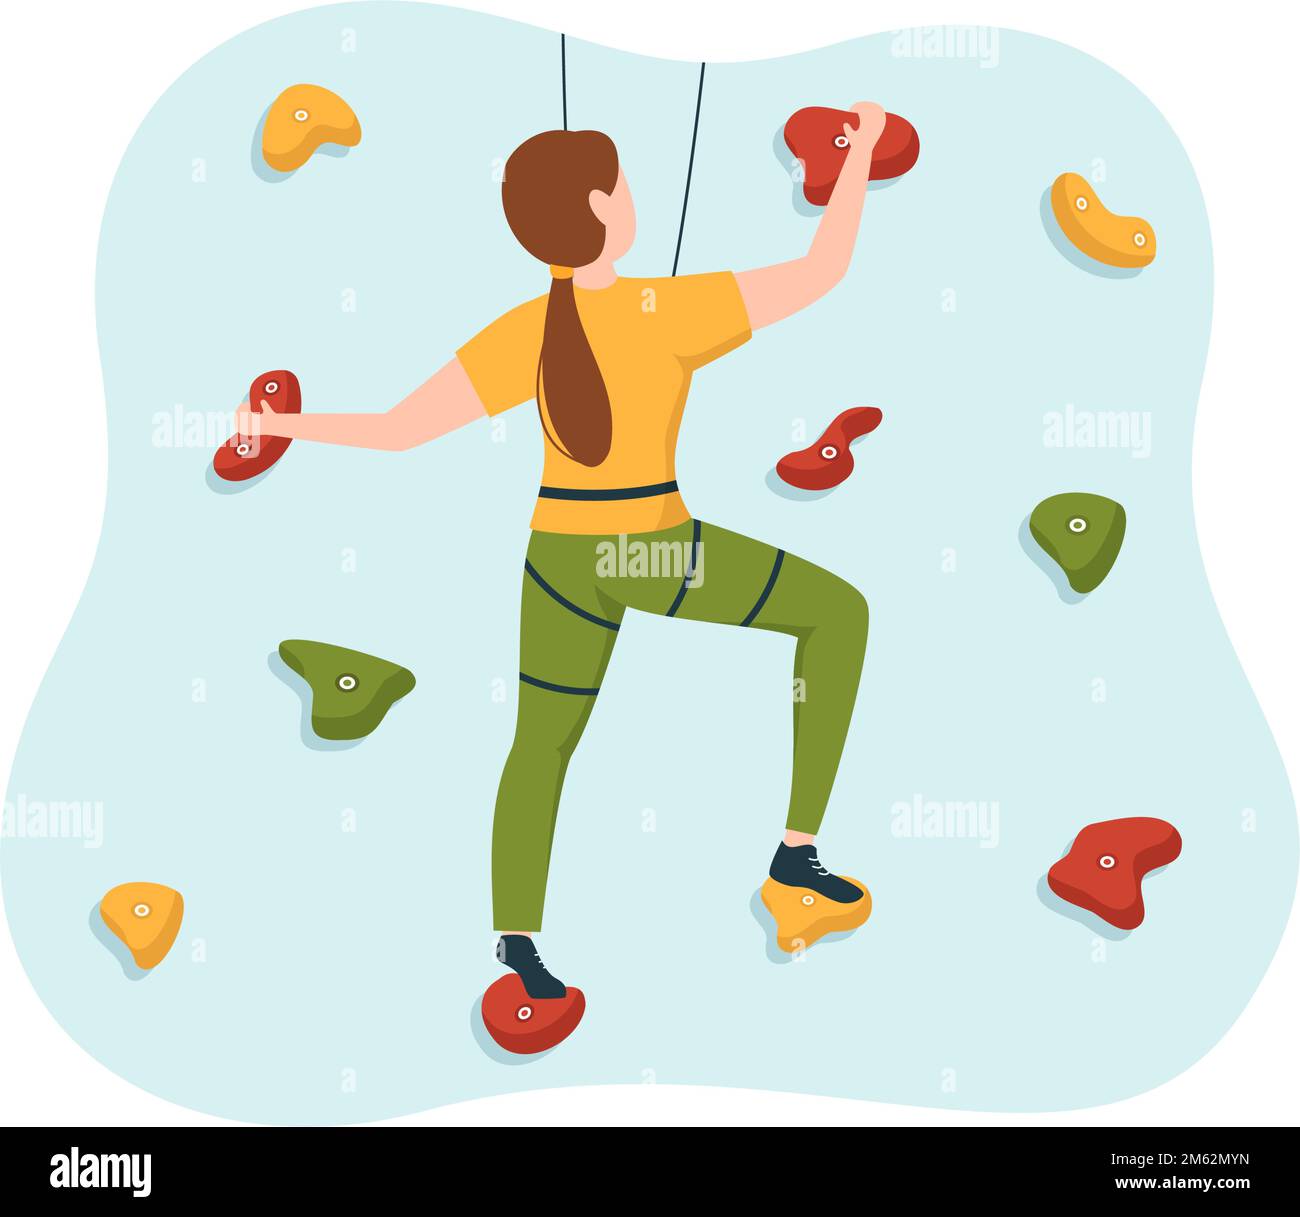 Cliff Climbing Illustration mit Kletterer Climbing Rock Wall oder Mountain Cliffs und Extreme Activity Sport in Flat Cartoon Hand Drawn Template Stock Vektor